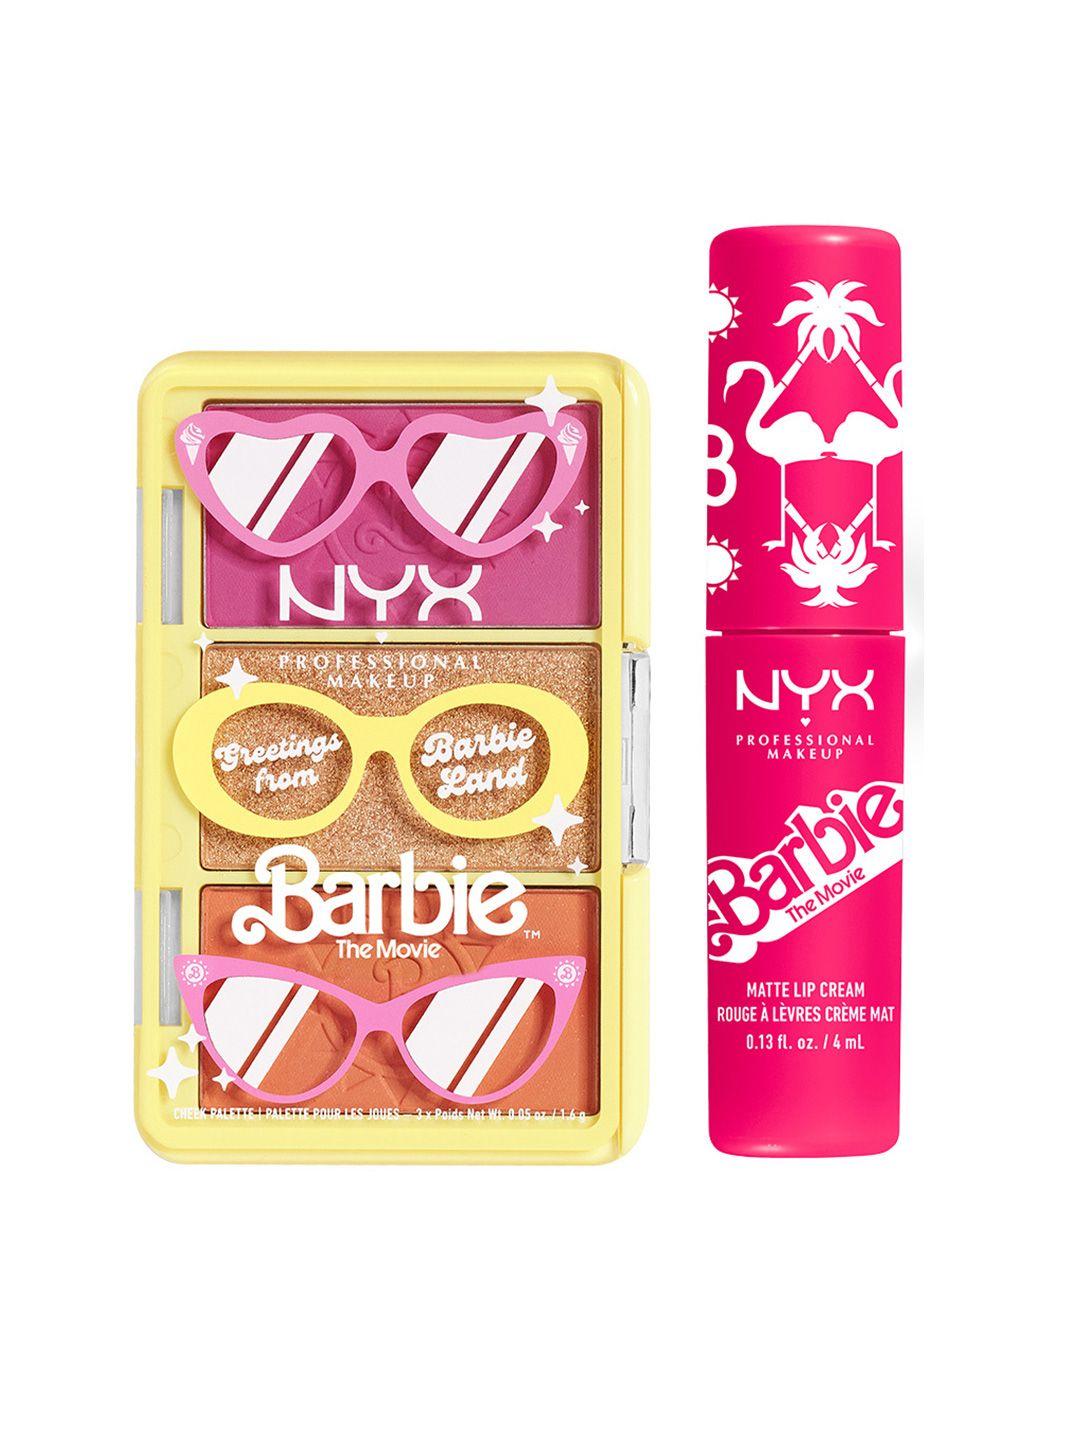 nyx professional makeup set of barbie the movie lip cream & barbie on the go cheek palette